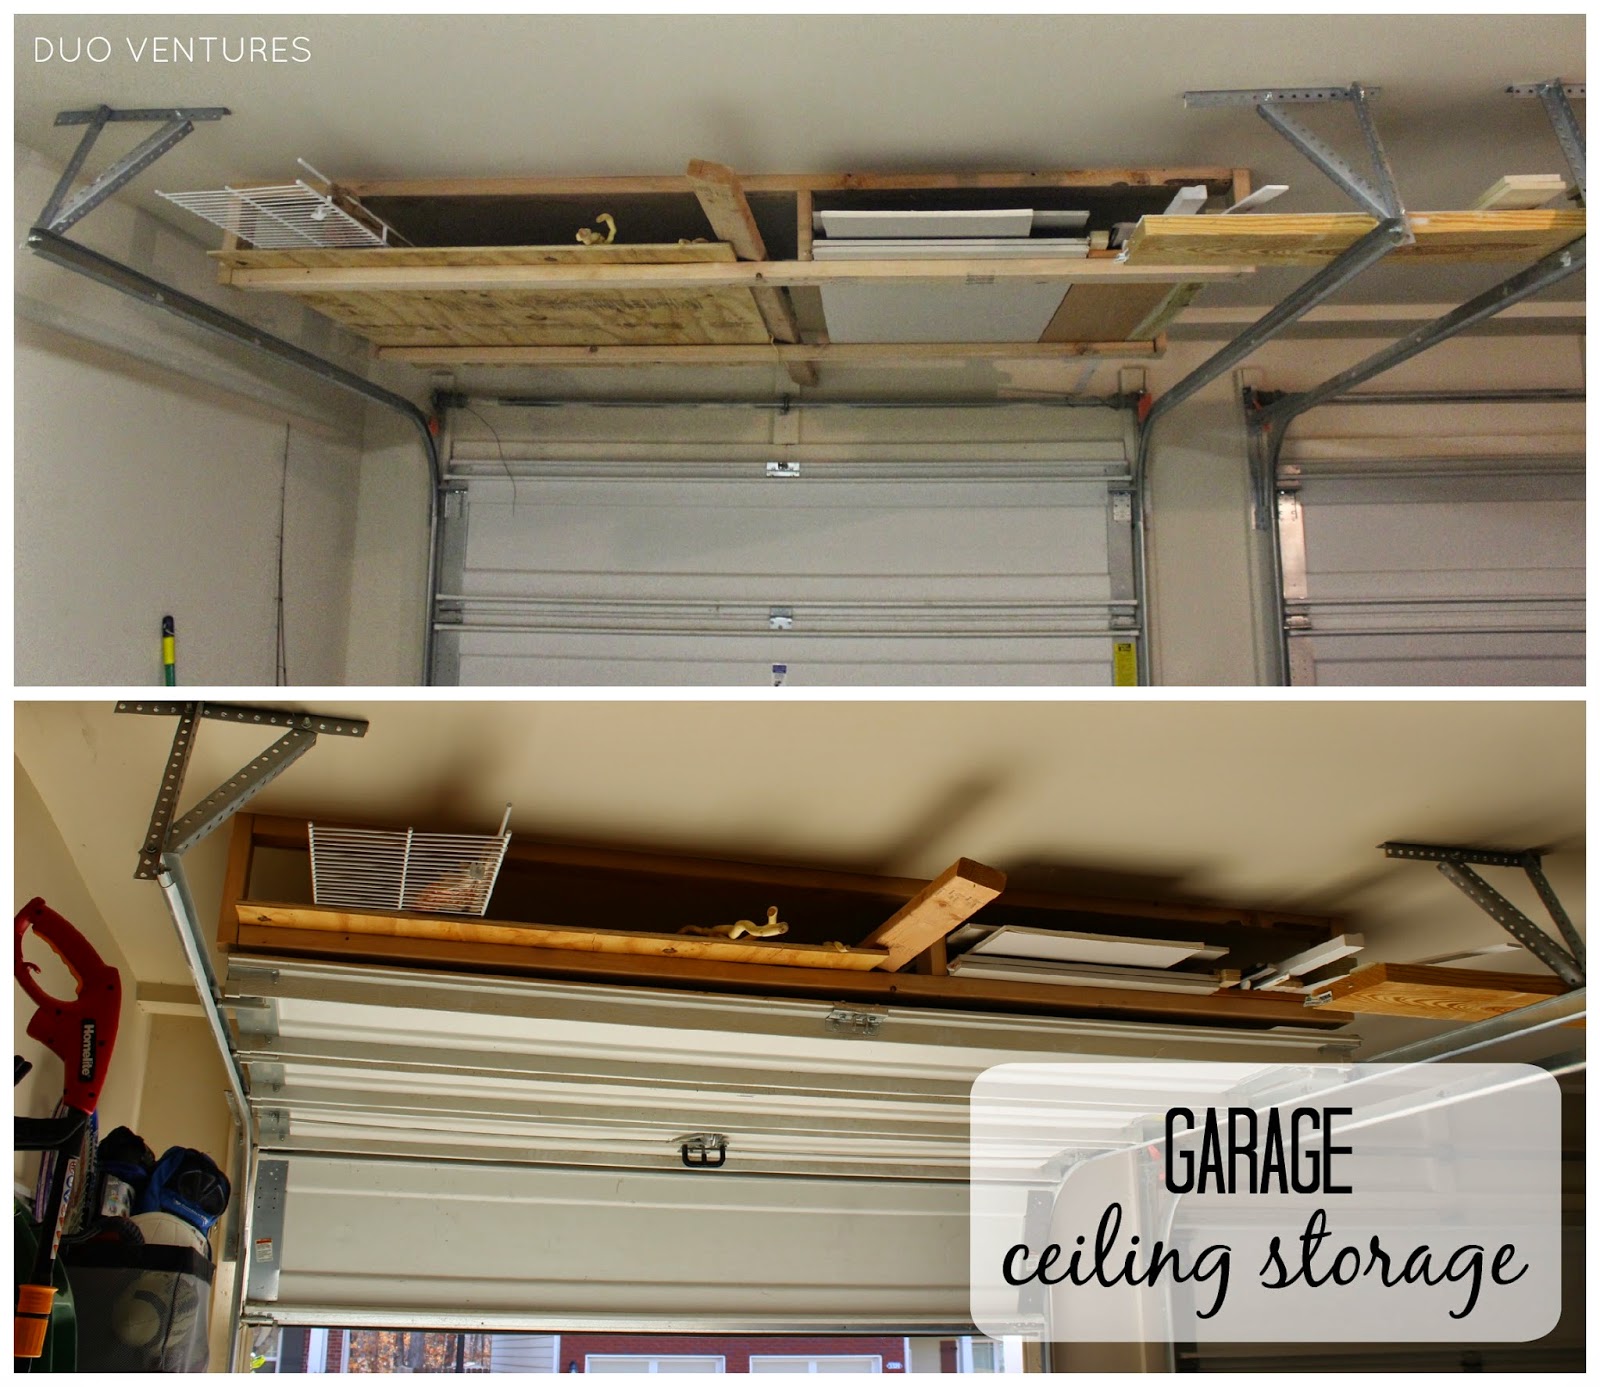 Duo Ventures: The Garage: Ceiling Storage